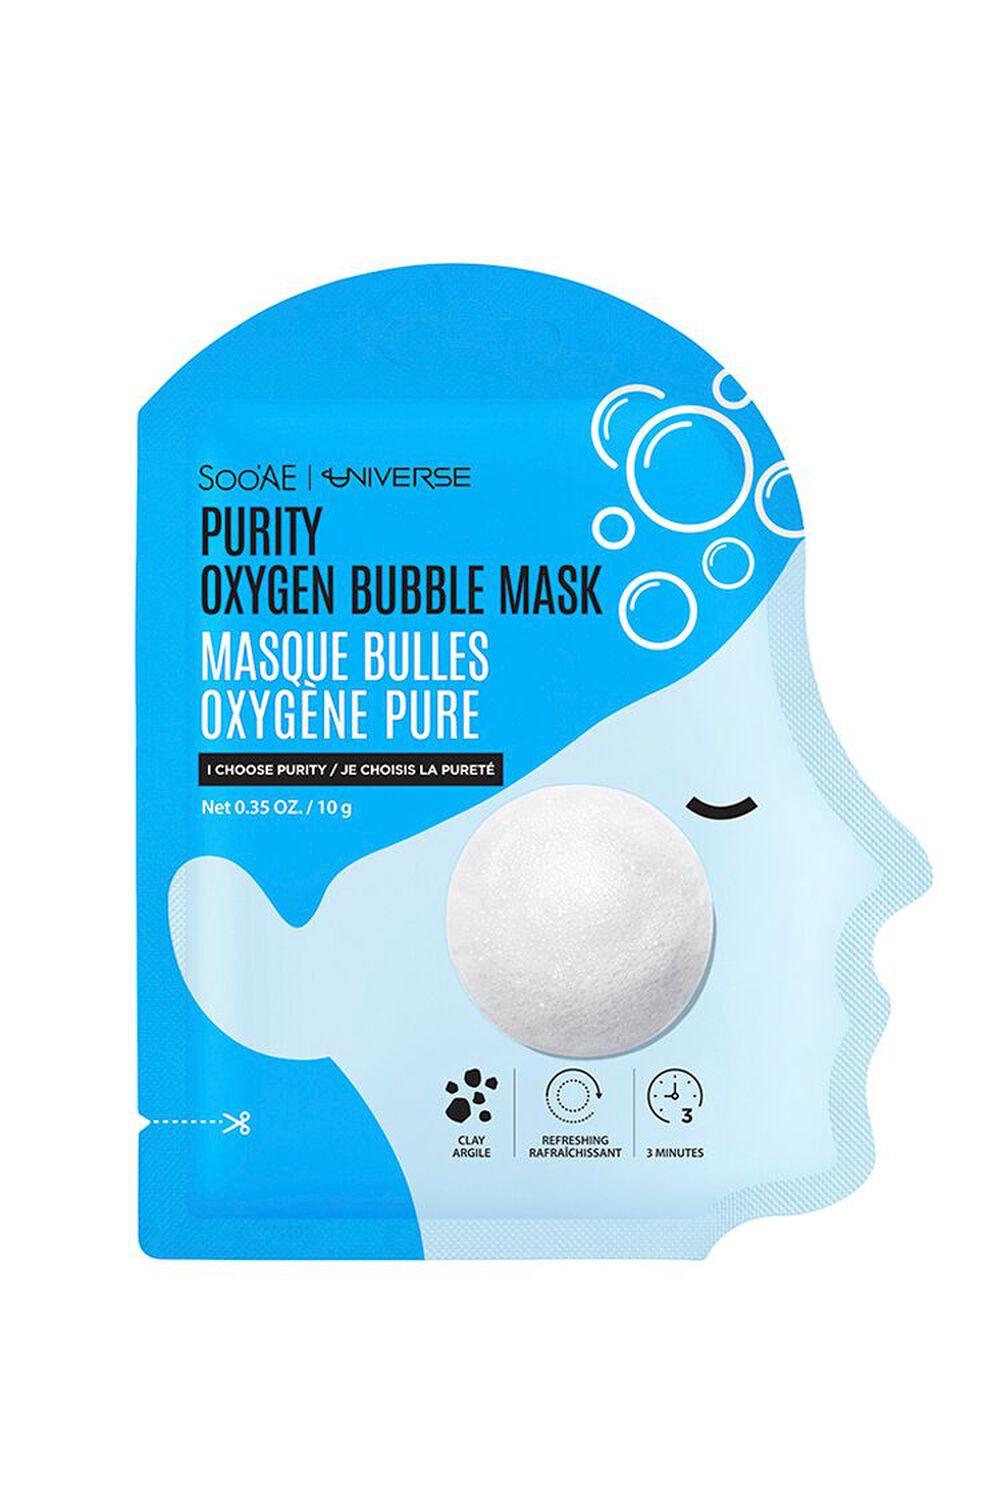 Sooae Purity Oxygen Bubble Mask